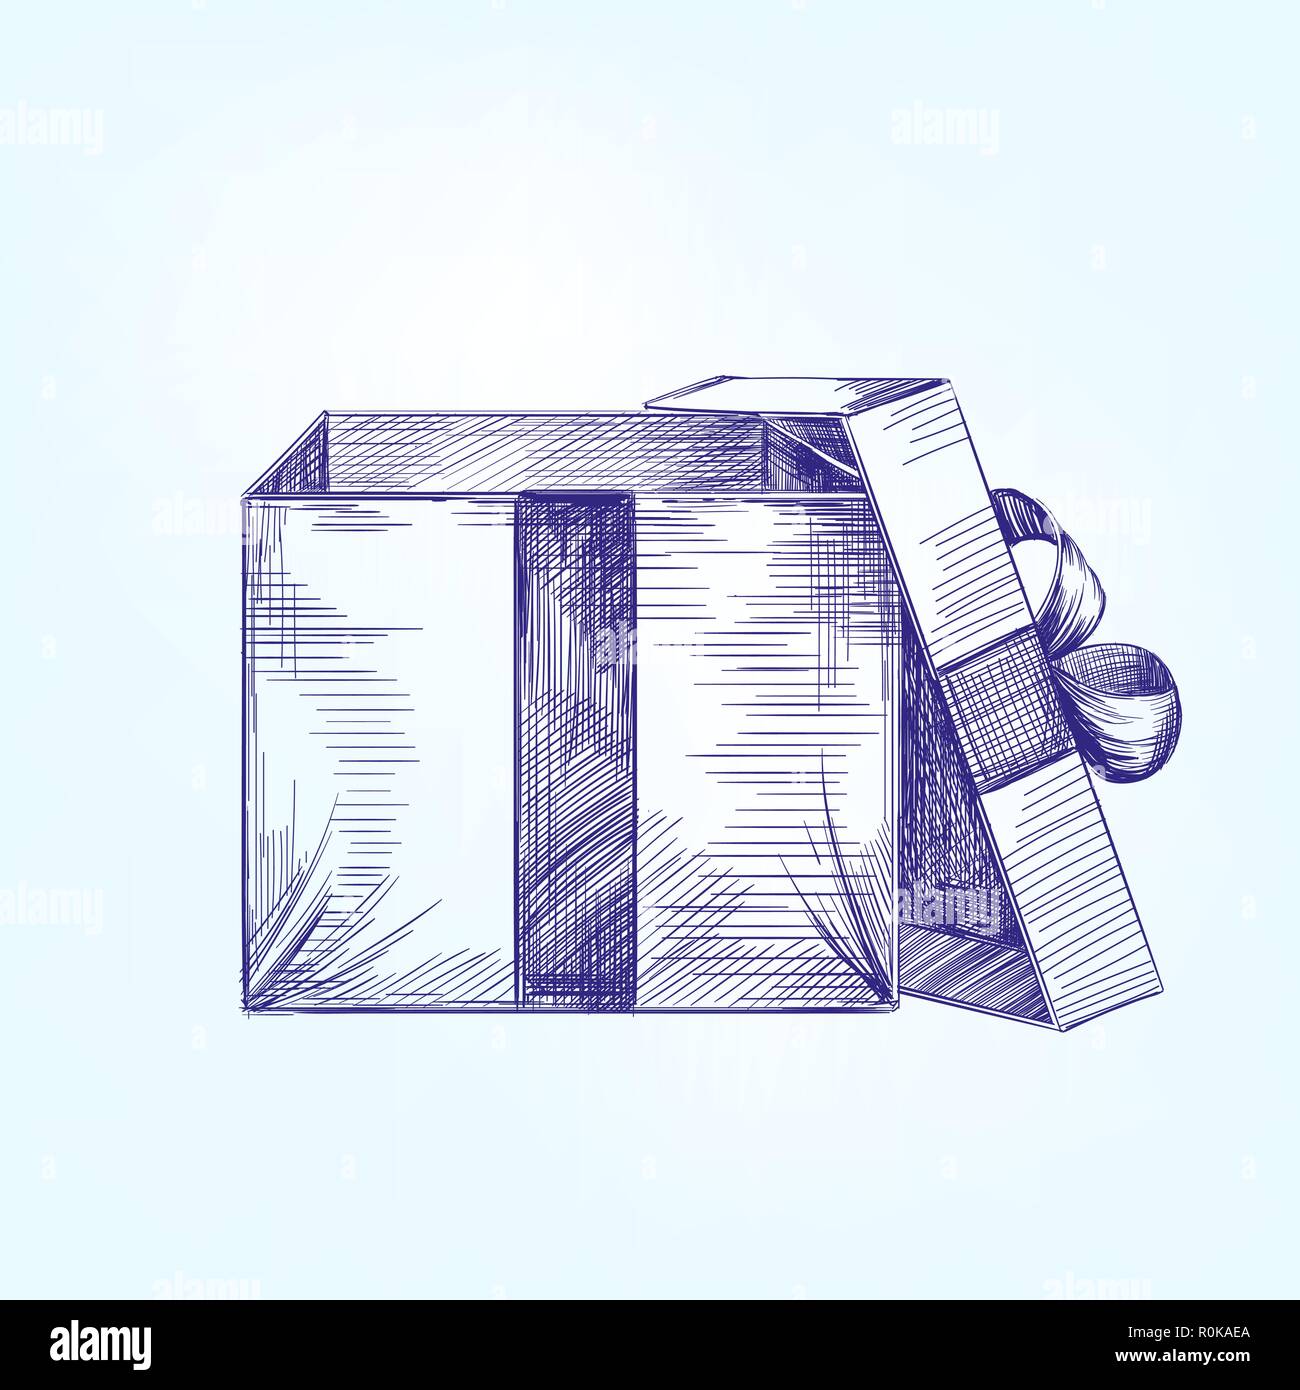 Open Box Sketch Stock Illustrations – 2,342 Open Box Sketch Stock